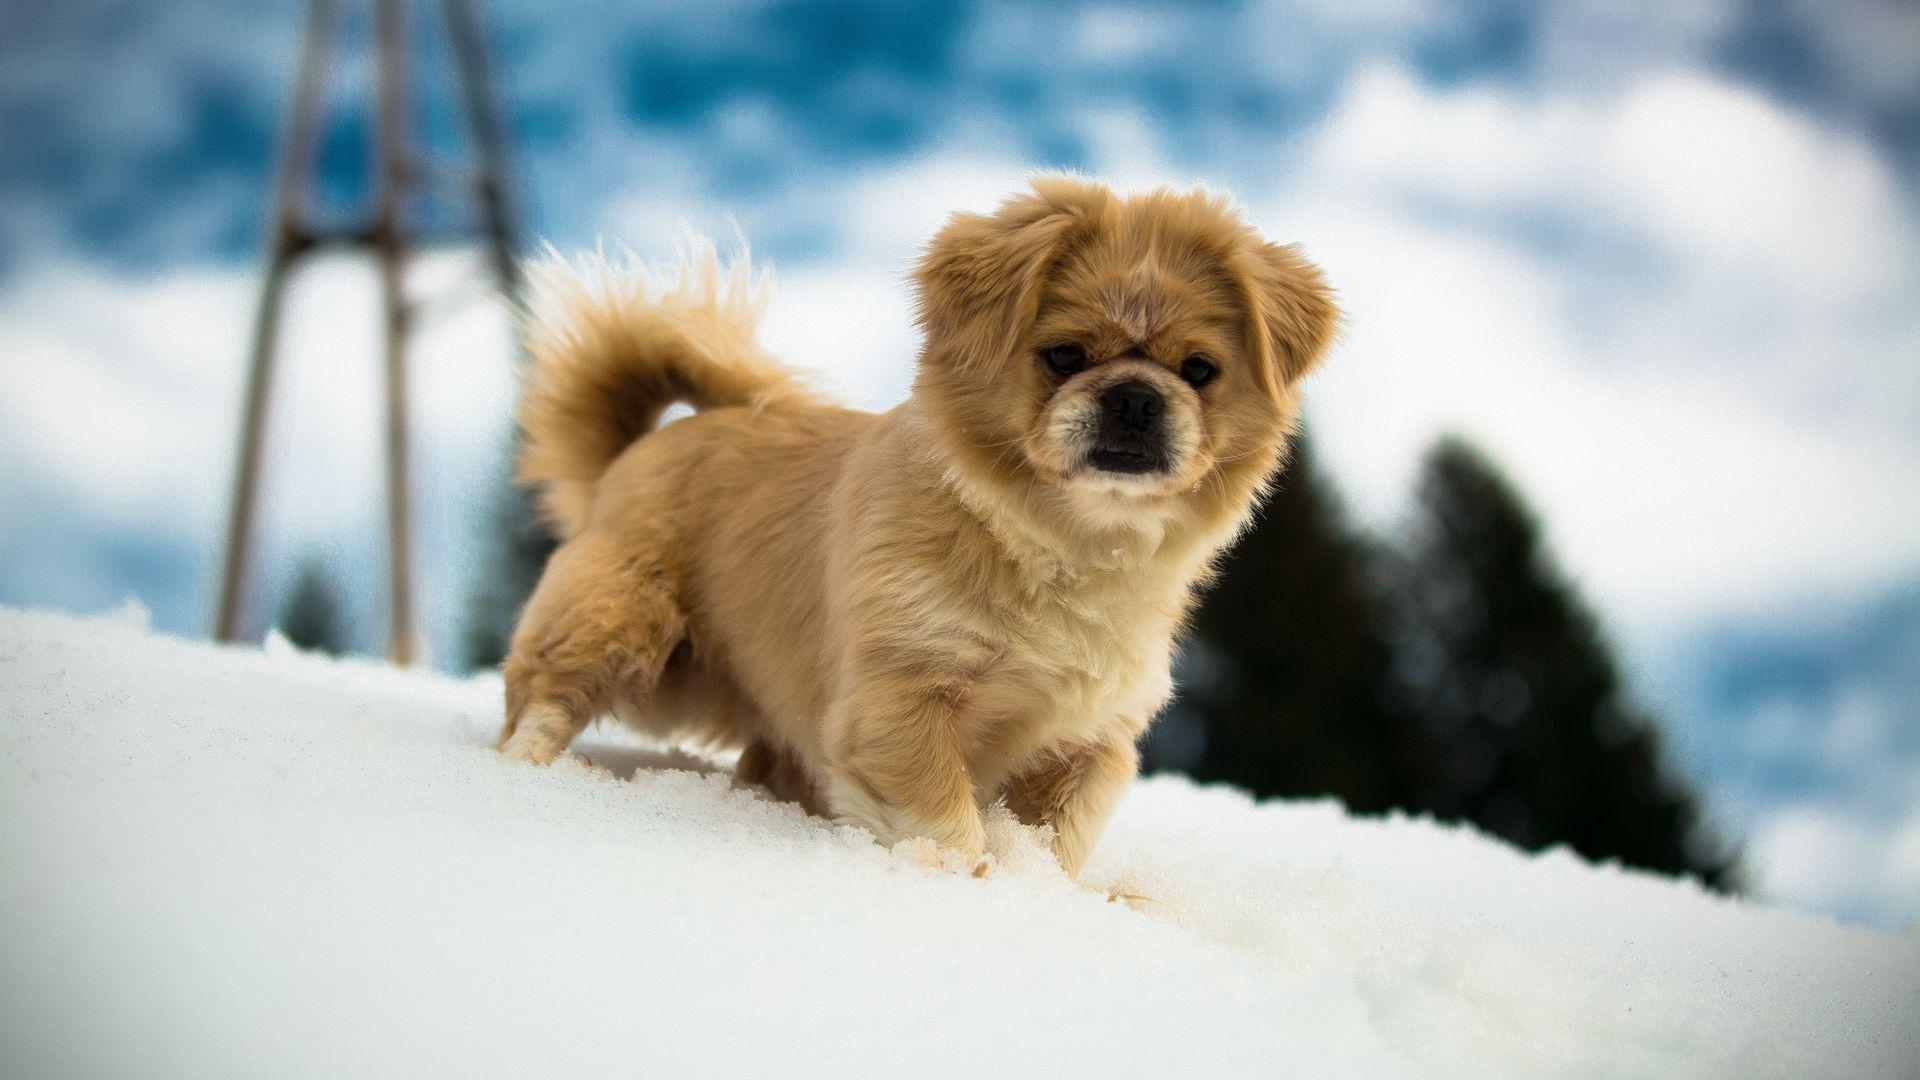 Little Puppy in Snow Wallpaper. Cute Puppy Wallpaper